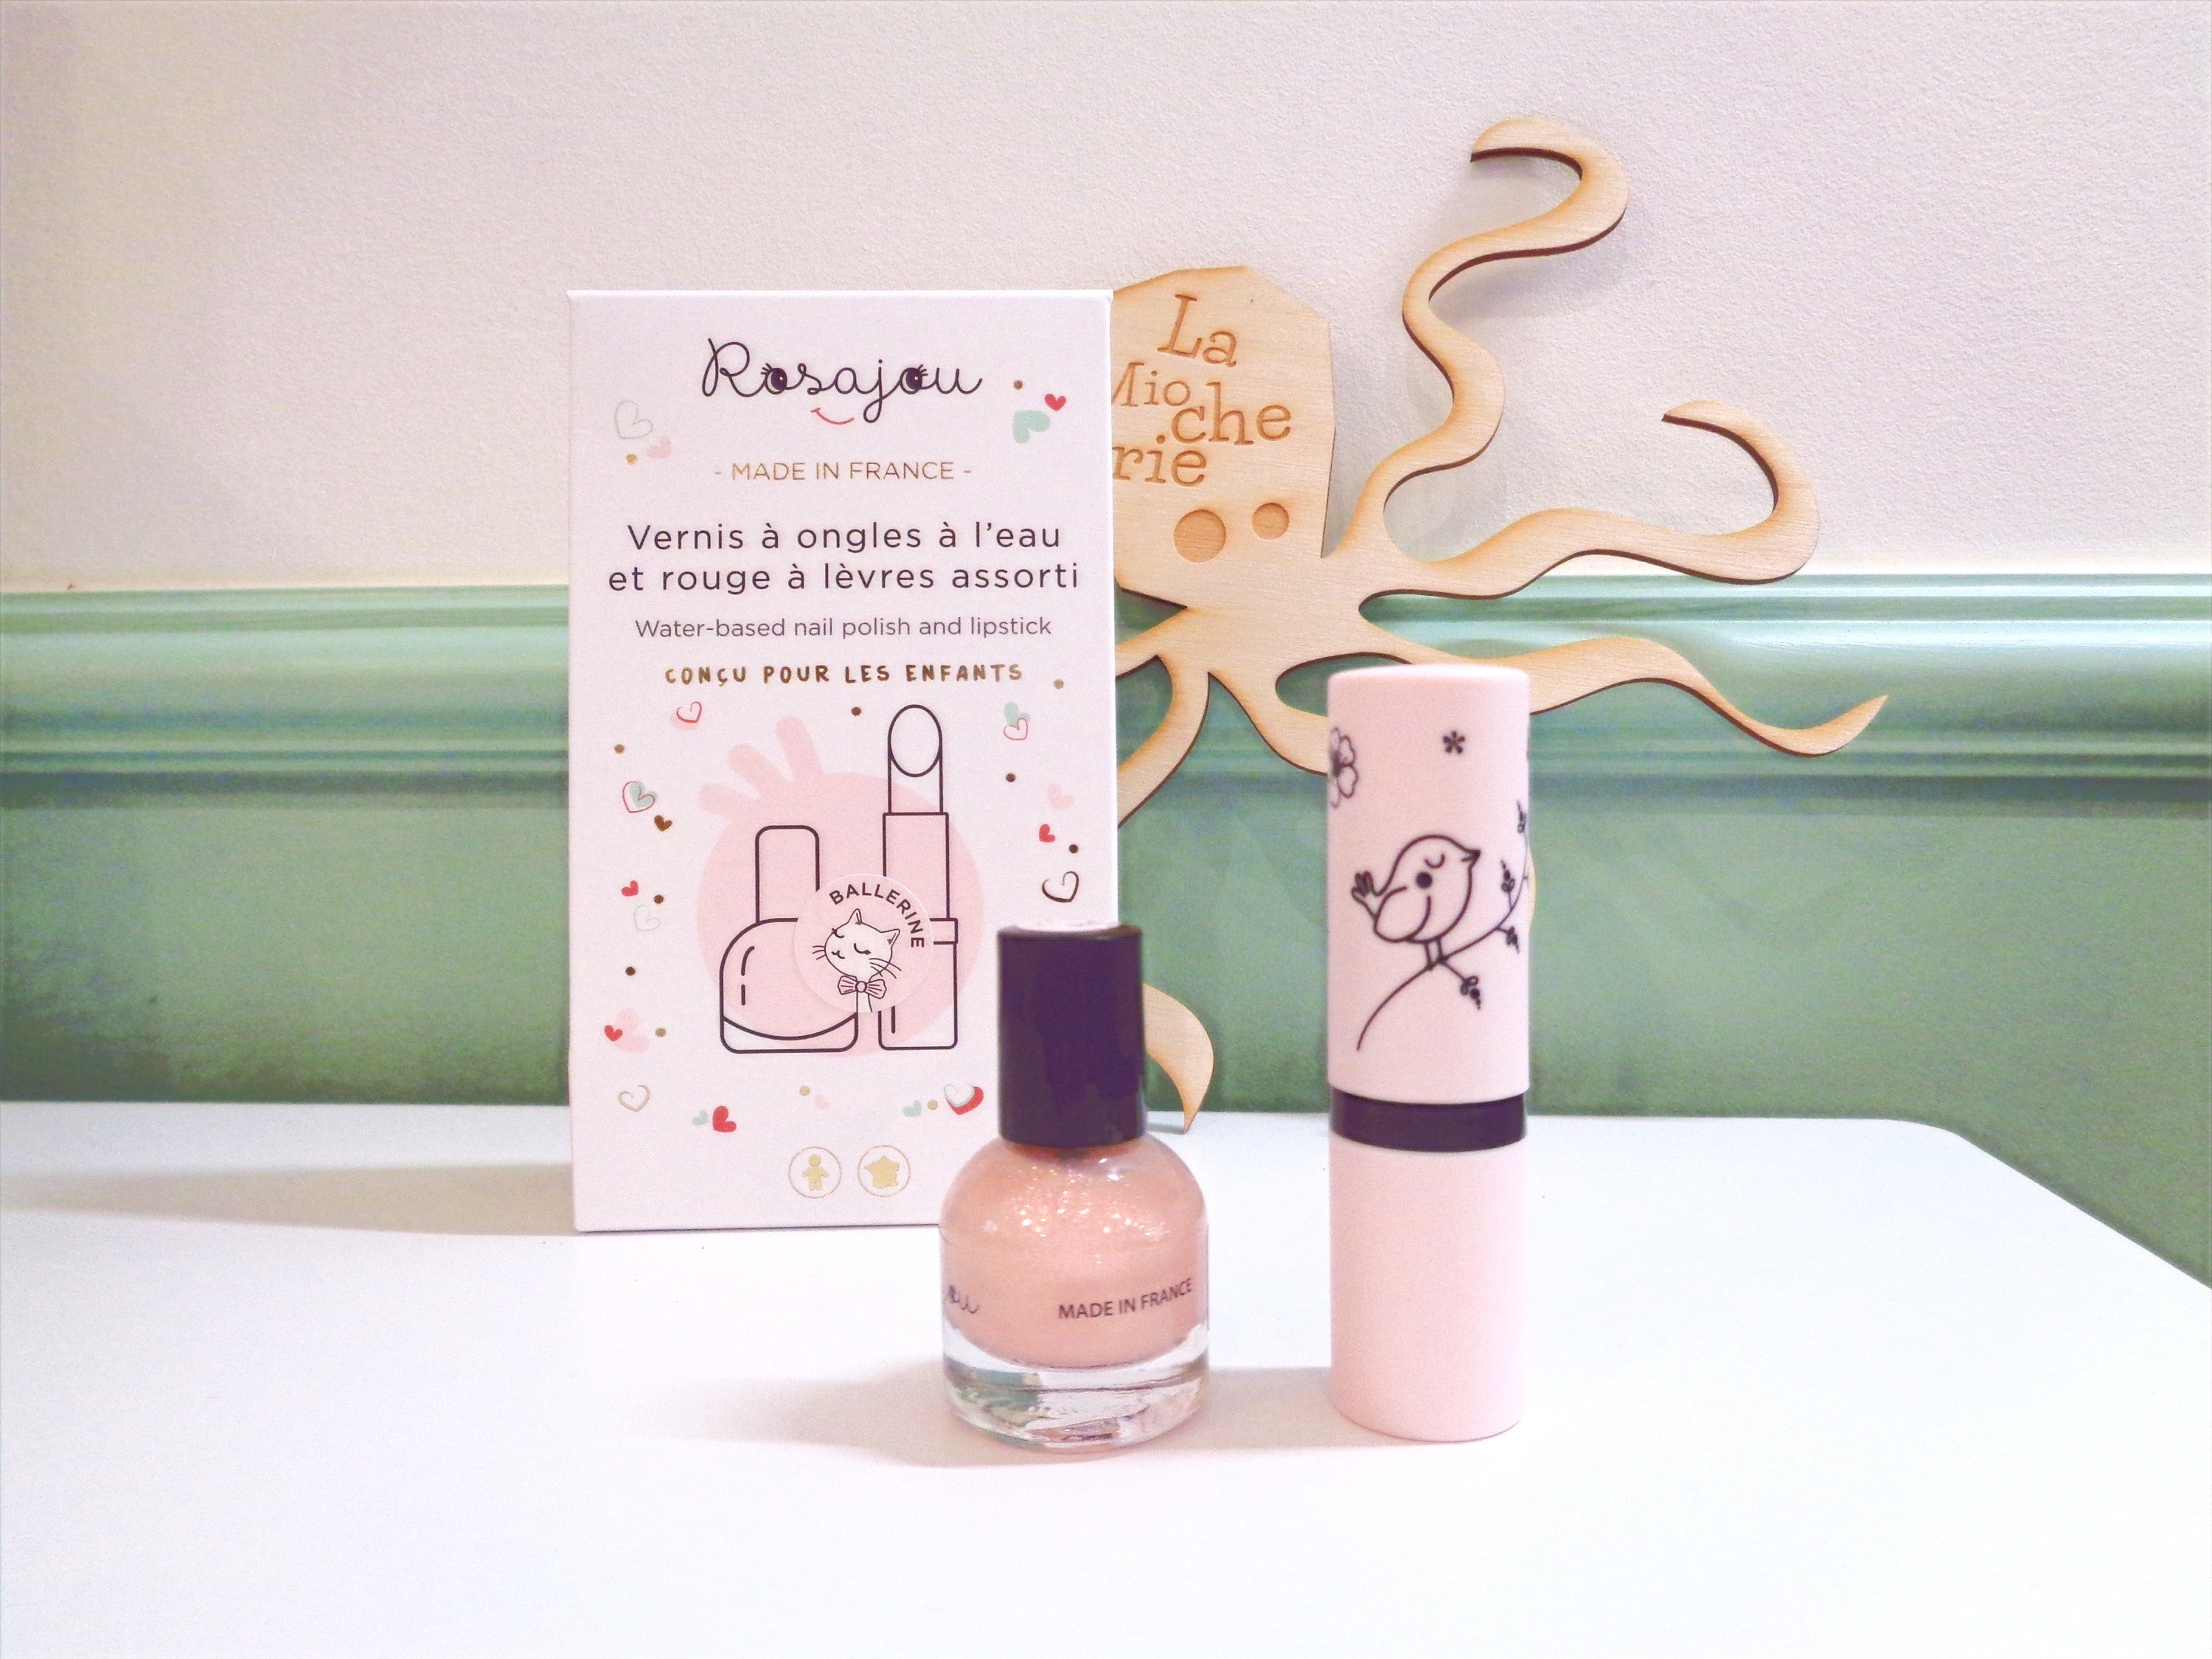 Rosajou lipstick and nail polish duo set